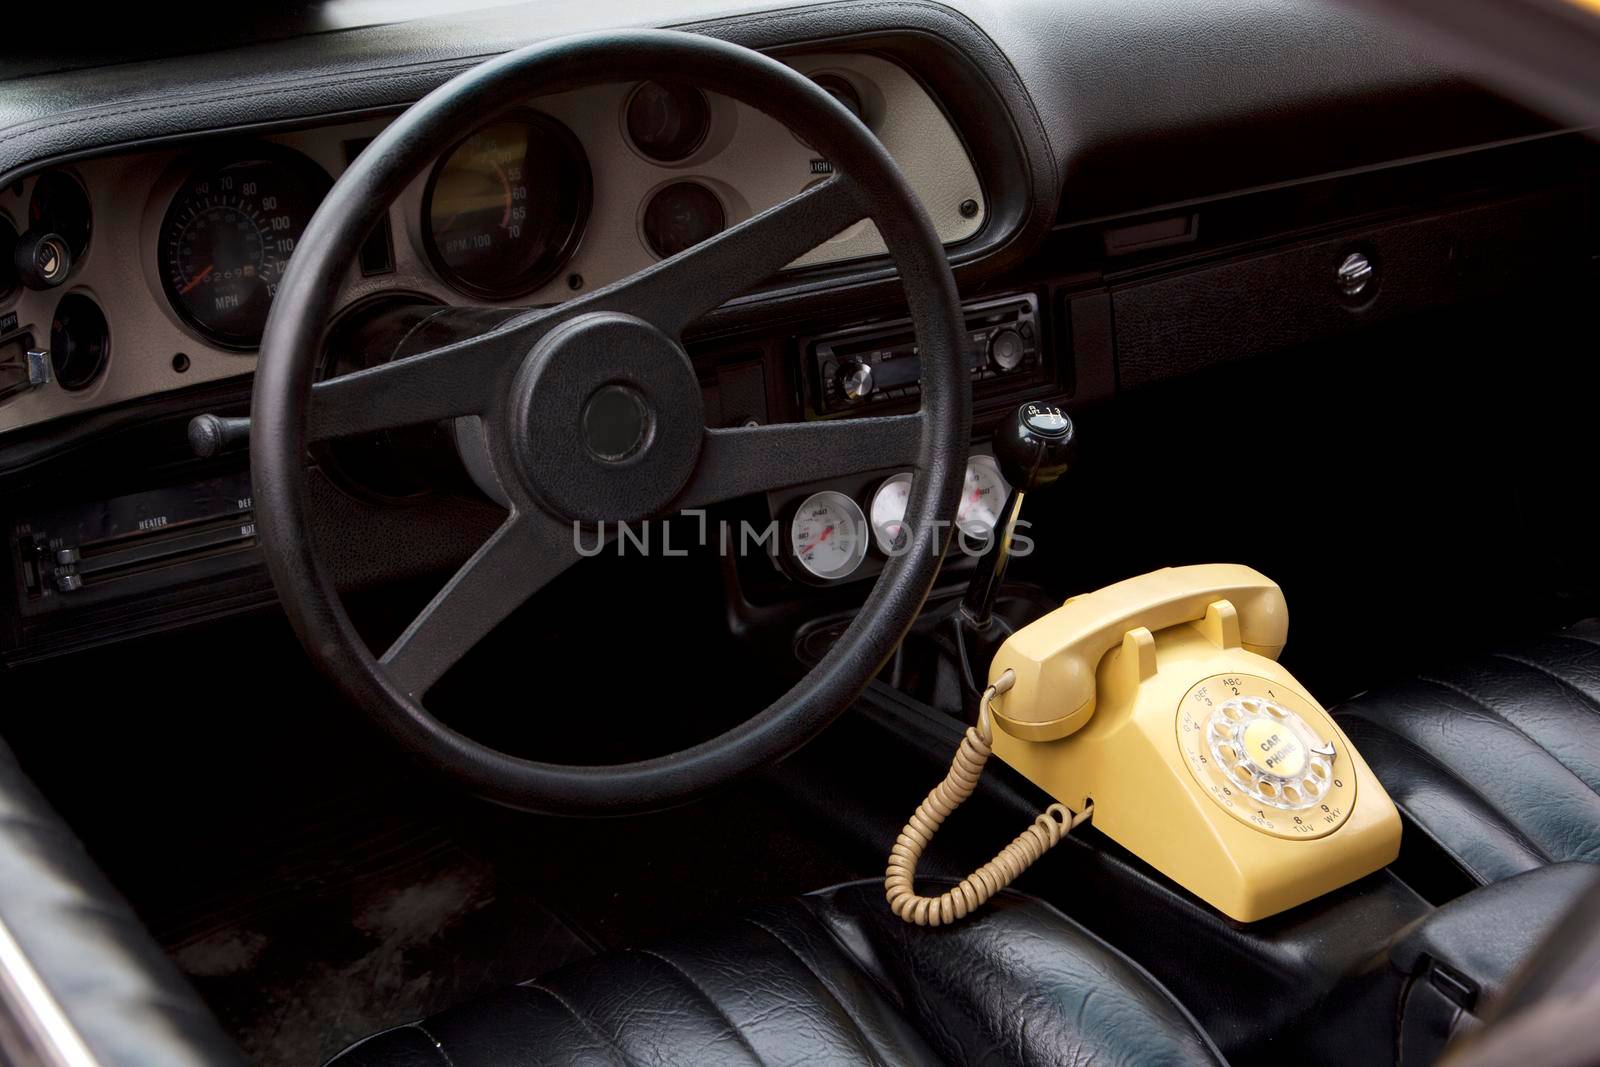  An old rotary telephone inside an antique car